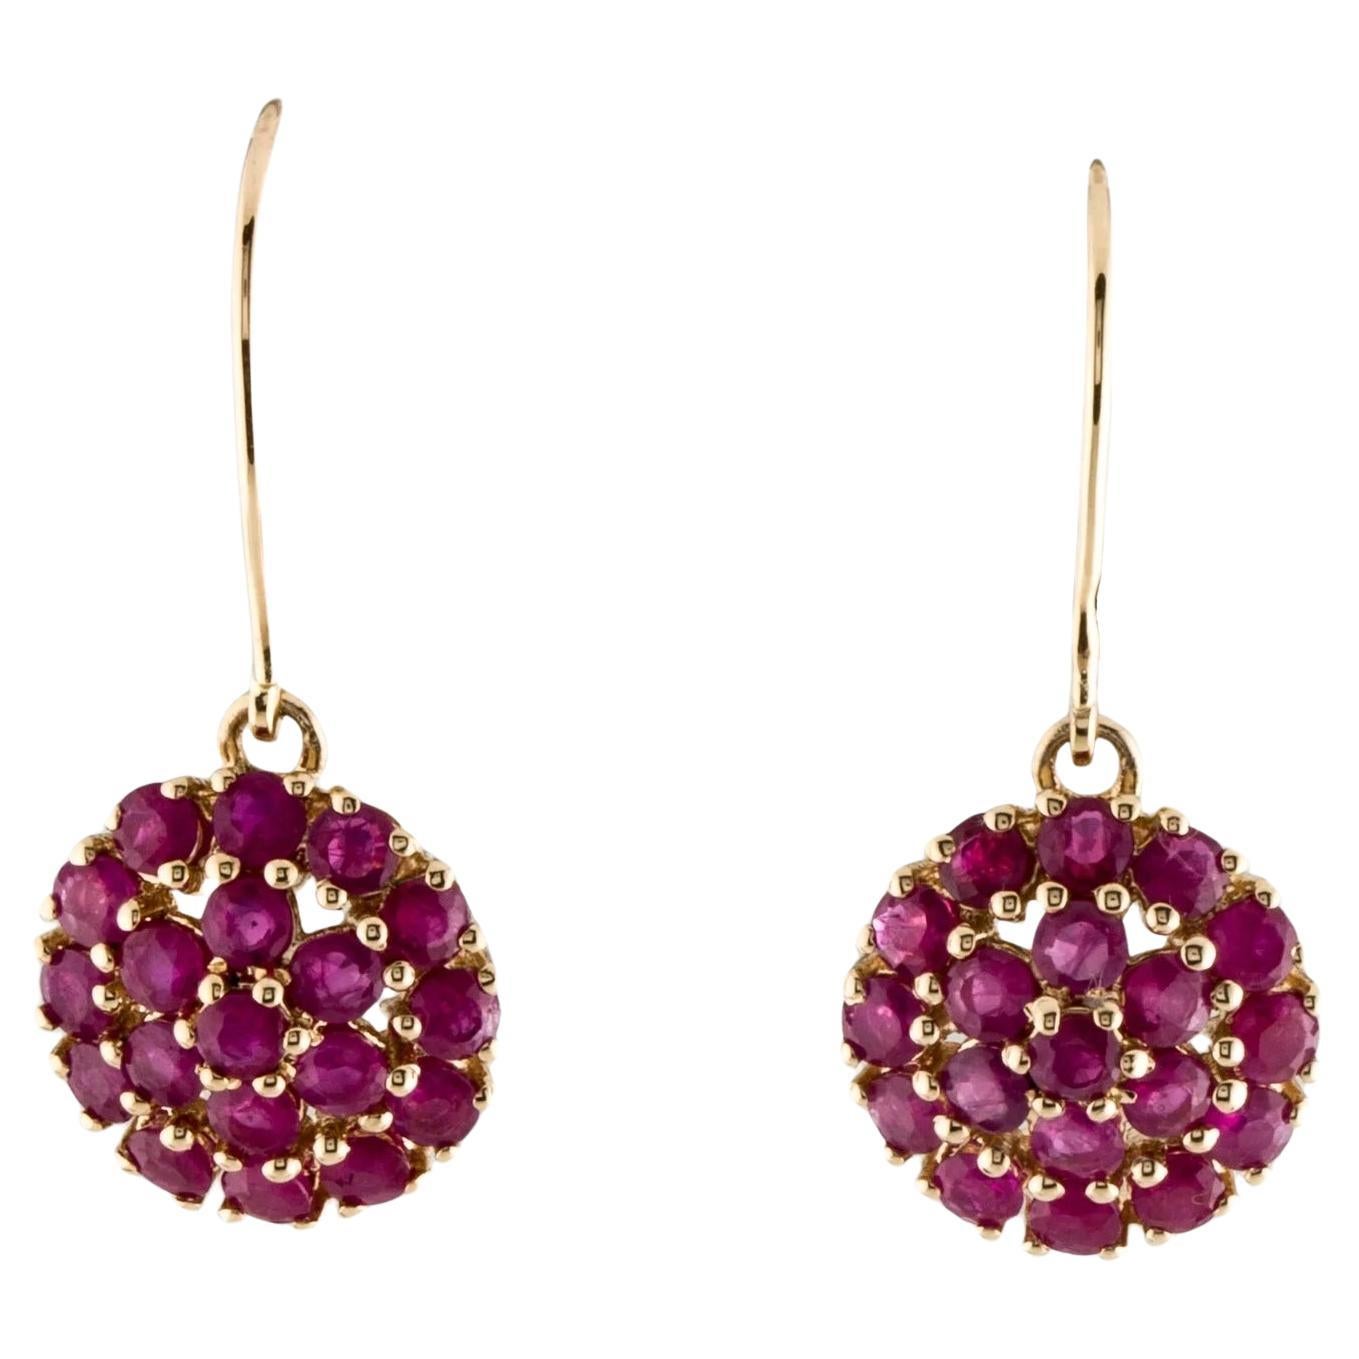 14K Ruby Drop Earrings  3.11 Carat Round Faceted Gemstones  Maker's Mark For Sale